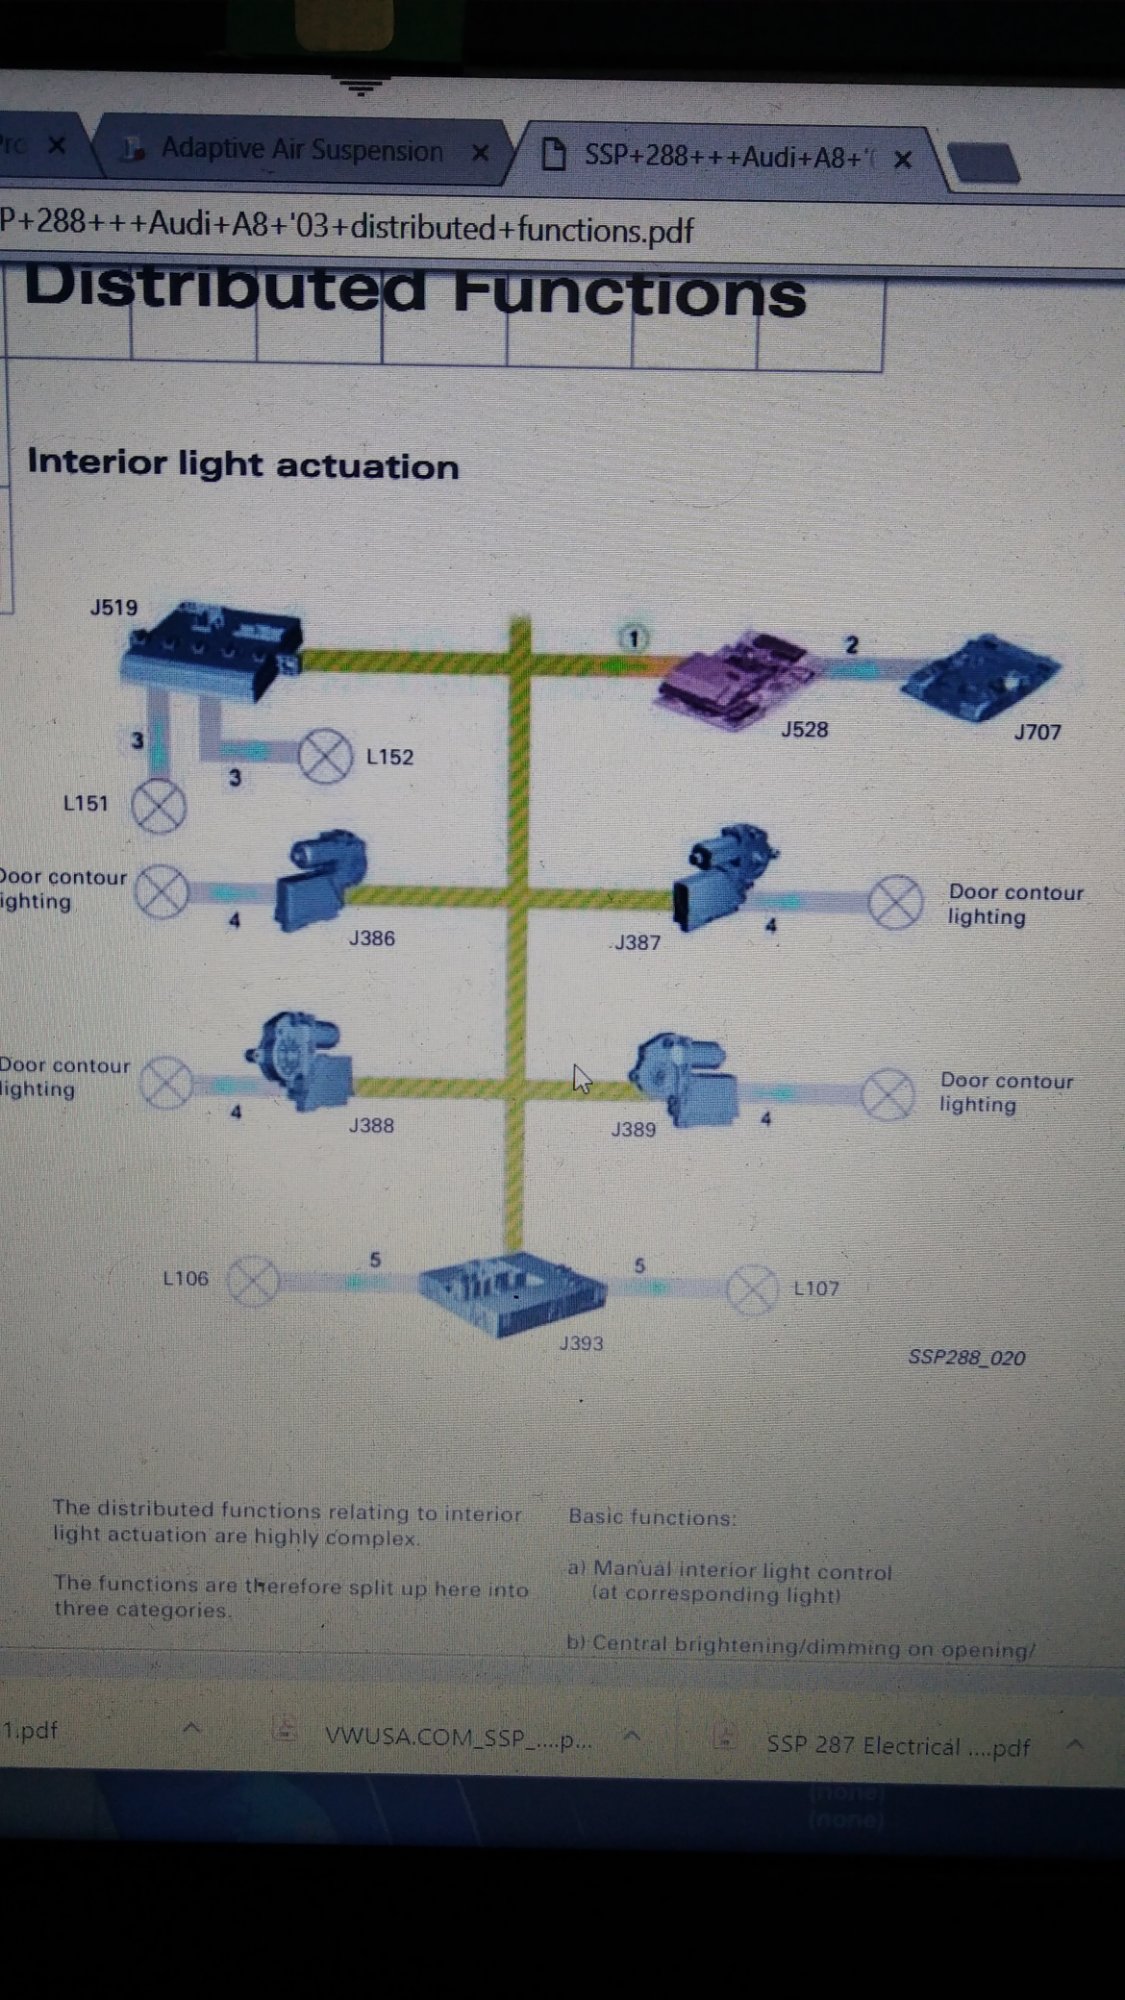 Схема завязки контурной подсветки